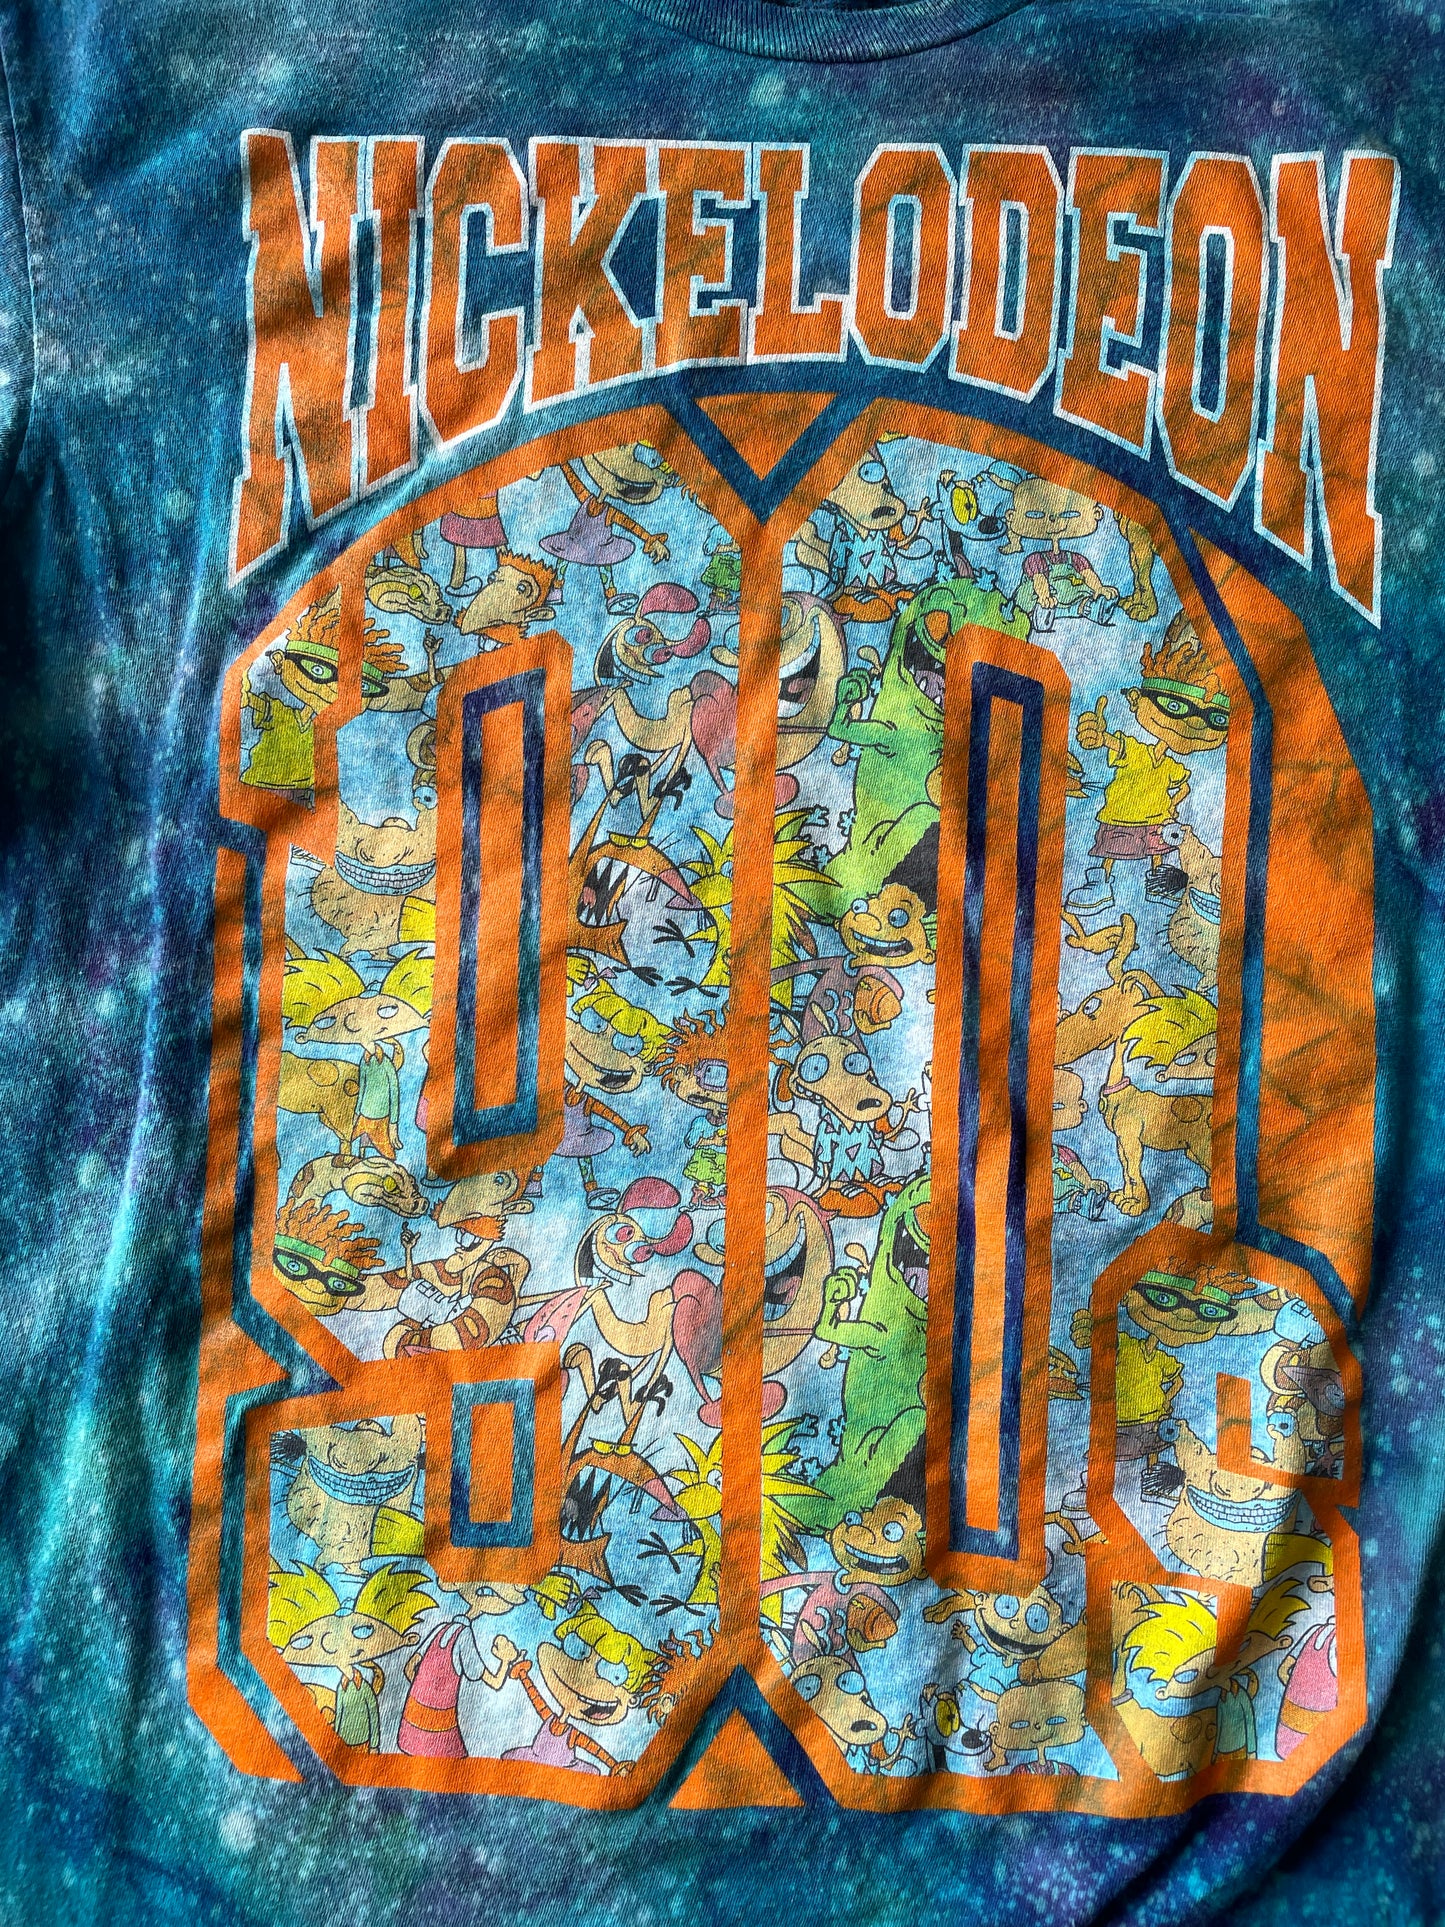 Large Men’s 90s Nickelodeon Handmade Tie Dye T-Shirt | Blue and Orange Galaxy Dye Short Sleeve